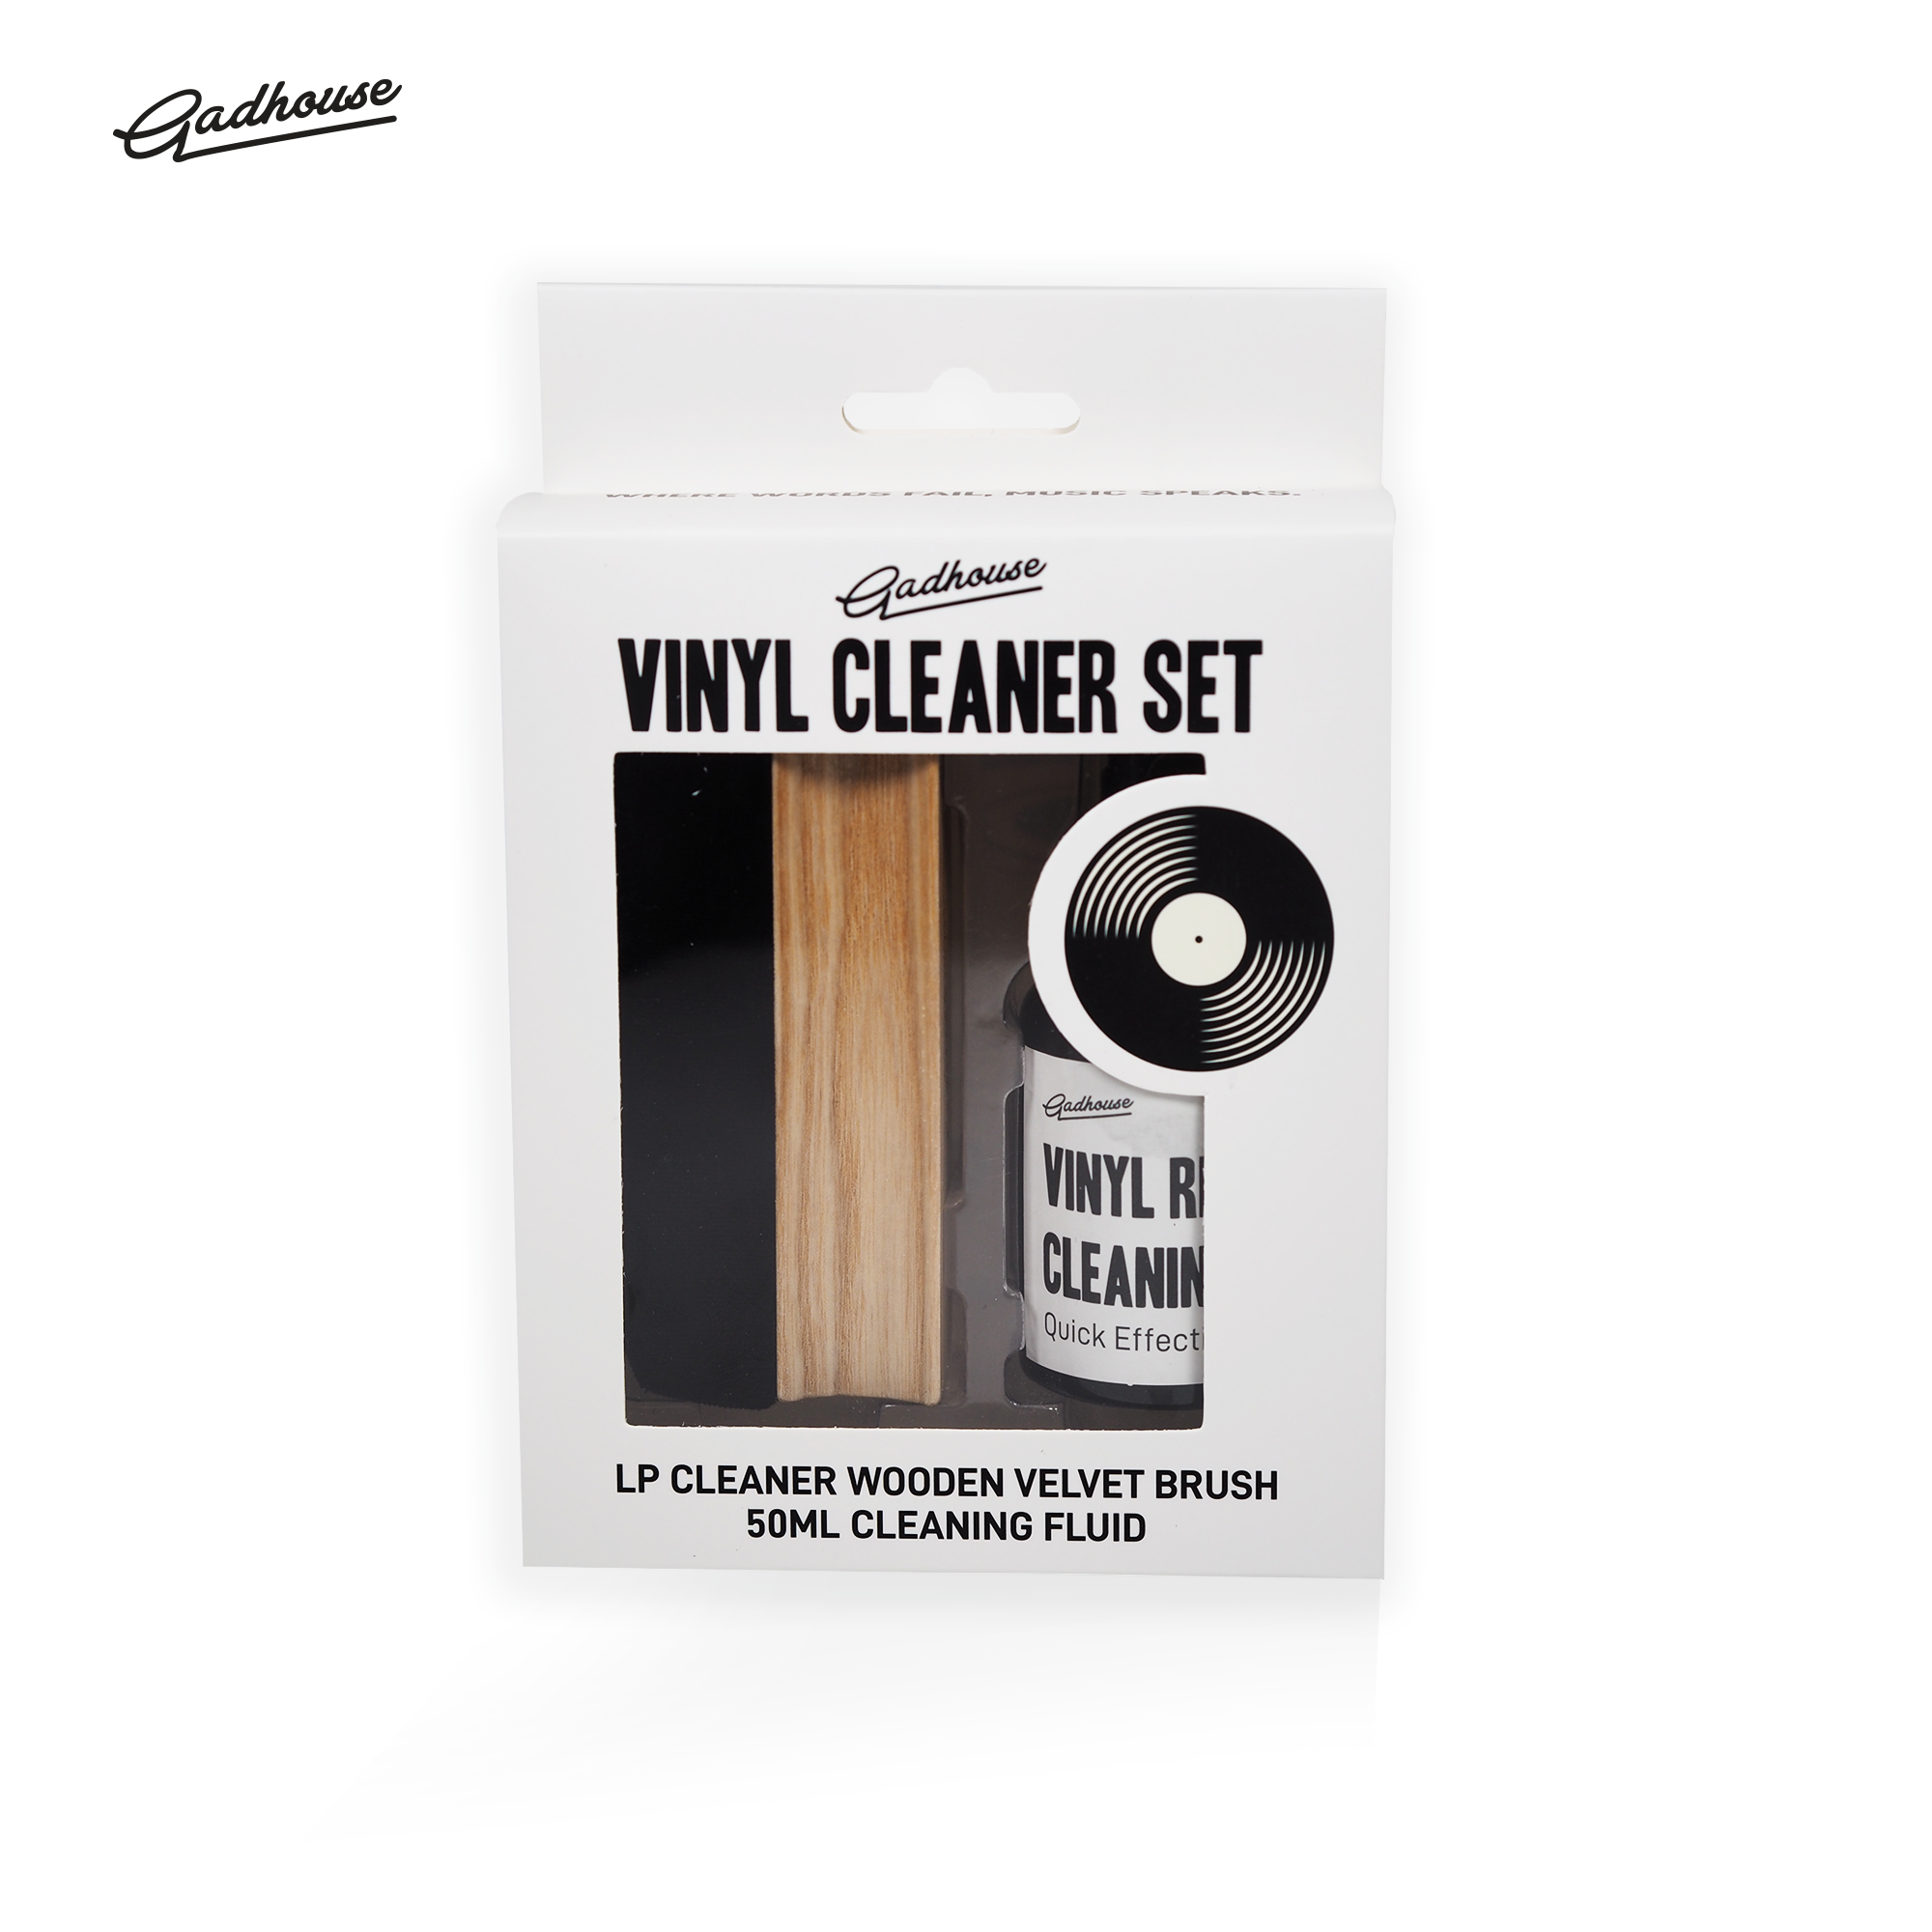 Gadhouse Vinyl cleaner set ชุดทำความสะอาดแผ่นเสียงไวนิล แปรงกำมะหยี่ + น้ำยาทำความสะอาดแผ่นเสียง ขนาด 50 มิล